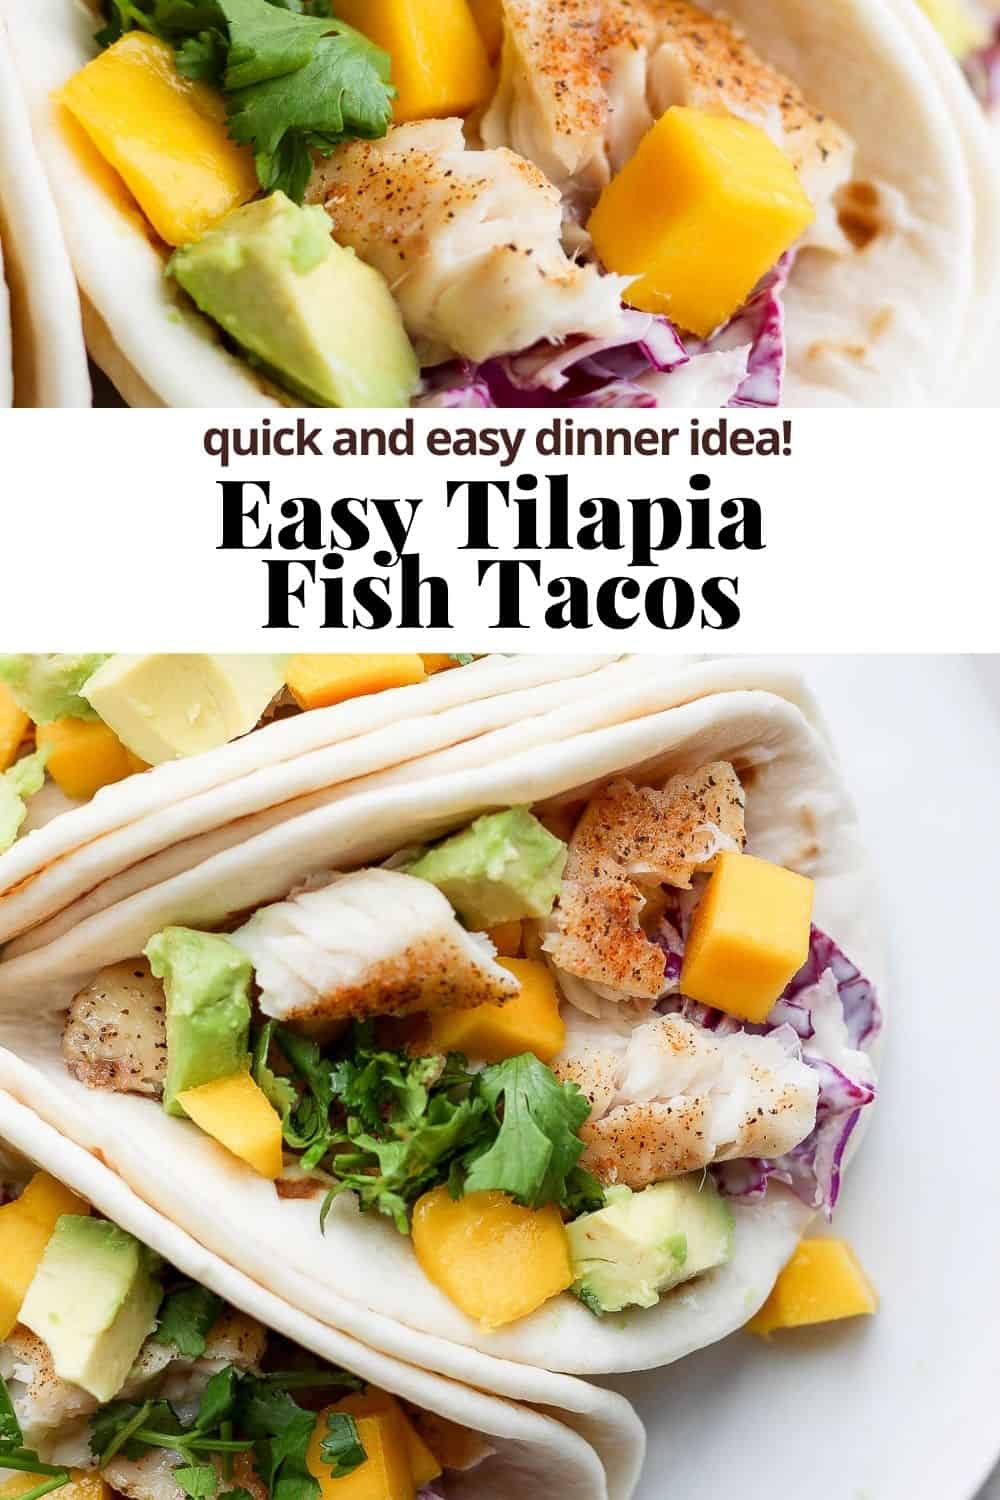 Fish taco Pinterest pin.